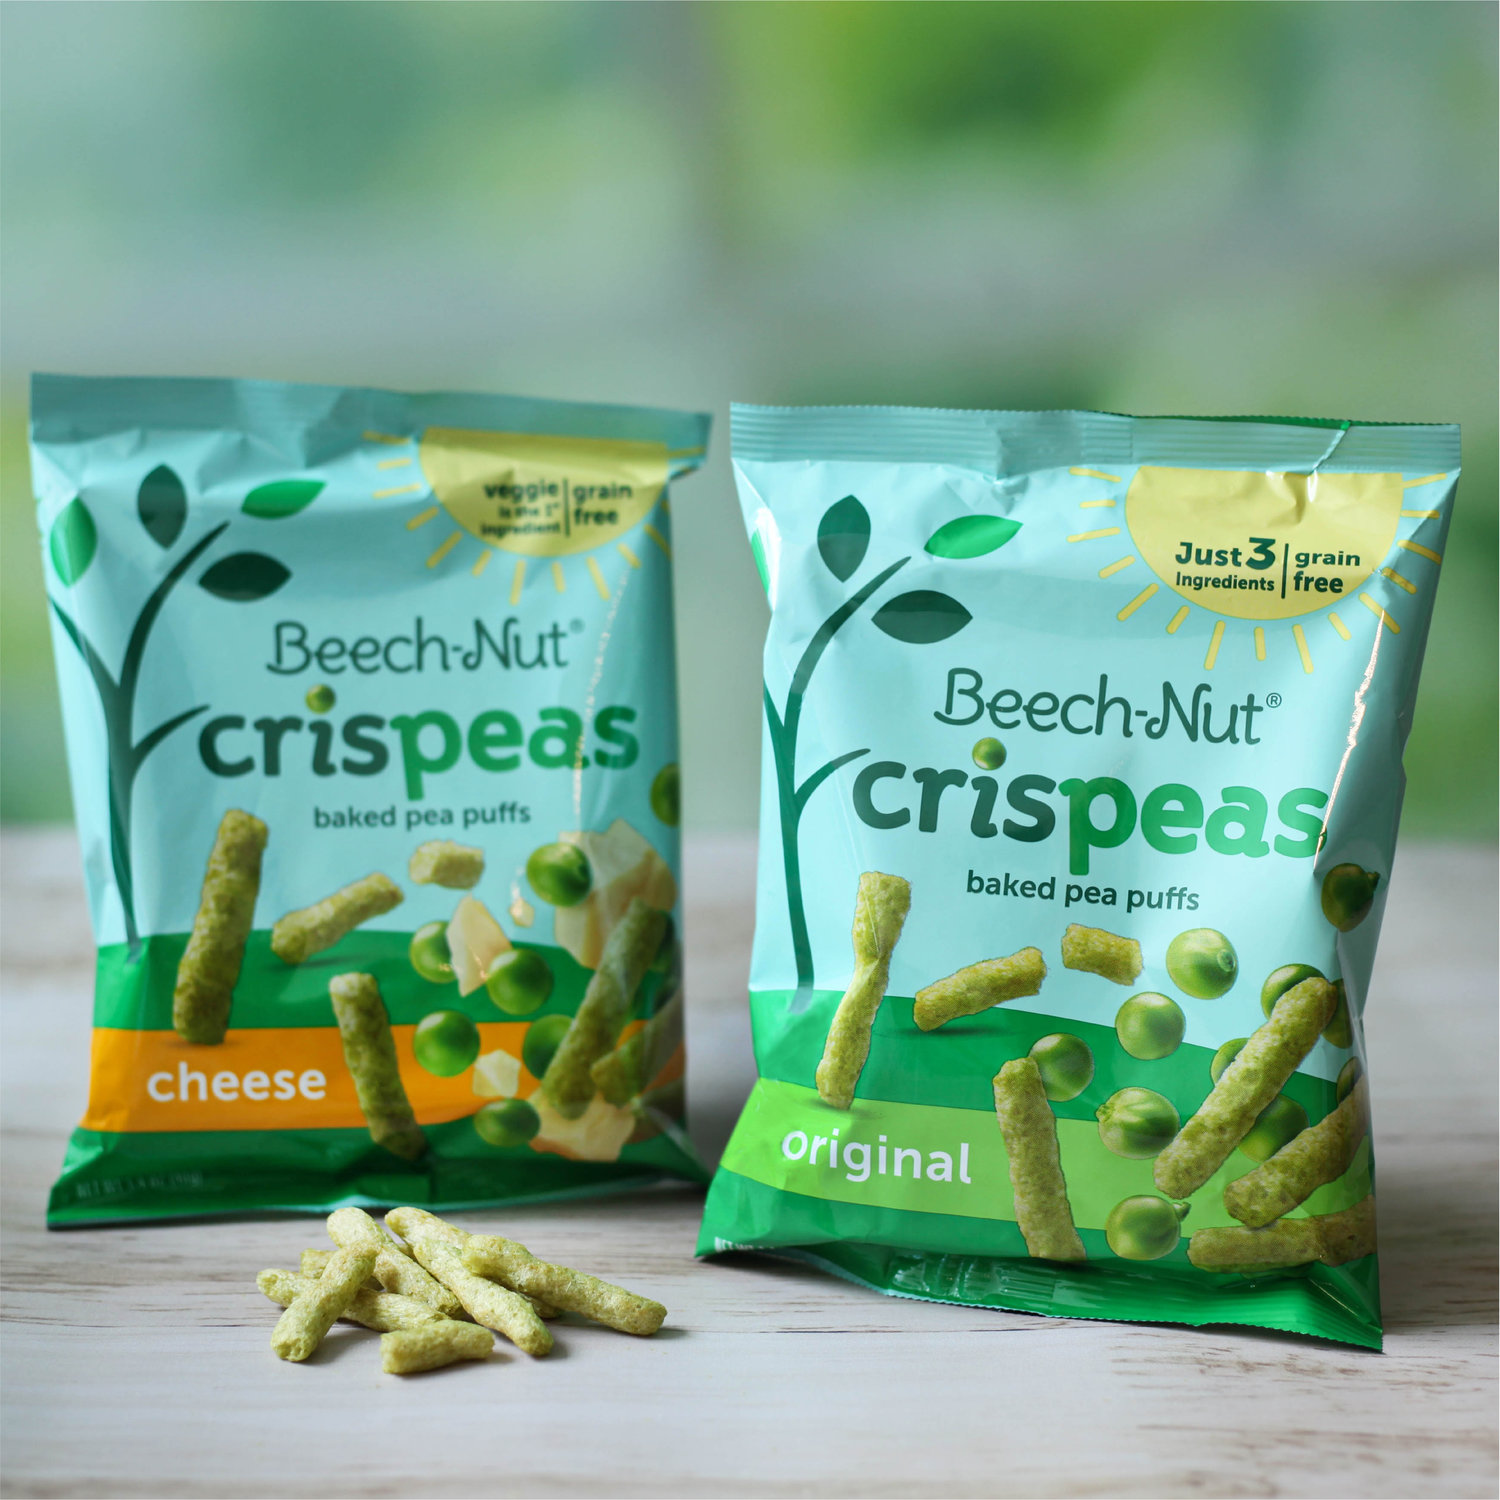 Crispeas are the latest innovation added to Beech-Nut’s snack portfolio.